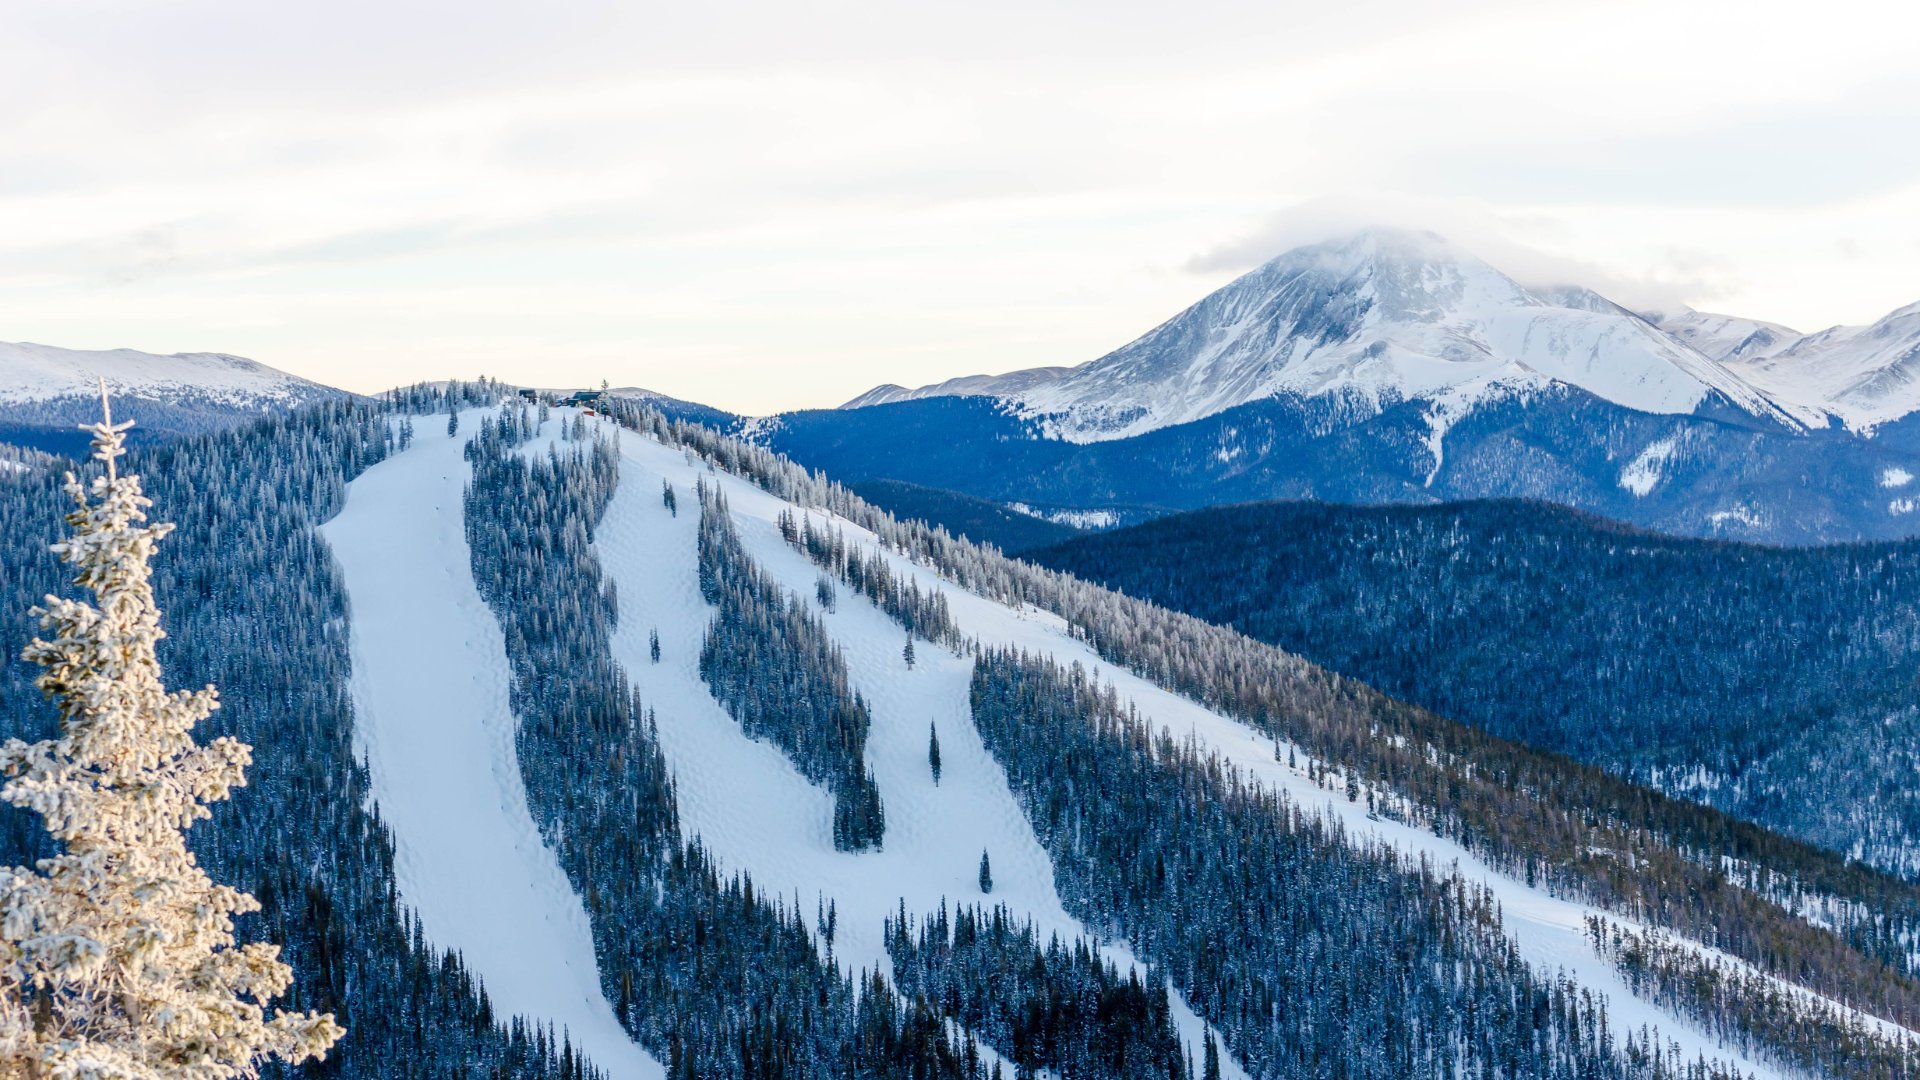 Keystone mountain overlooking ski slopes in a blanket of white snow